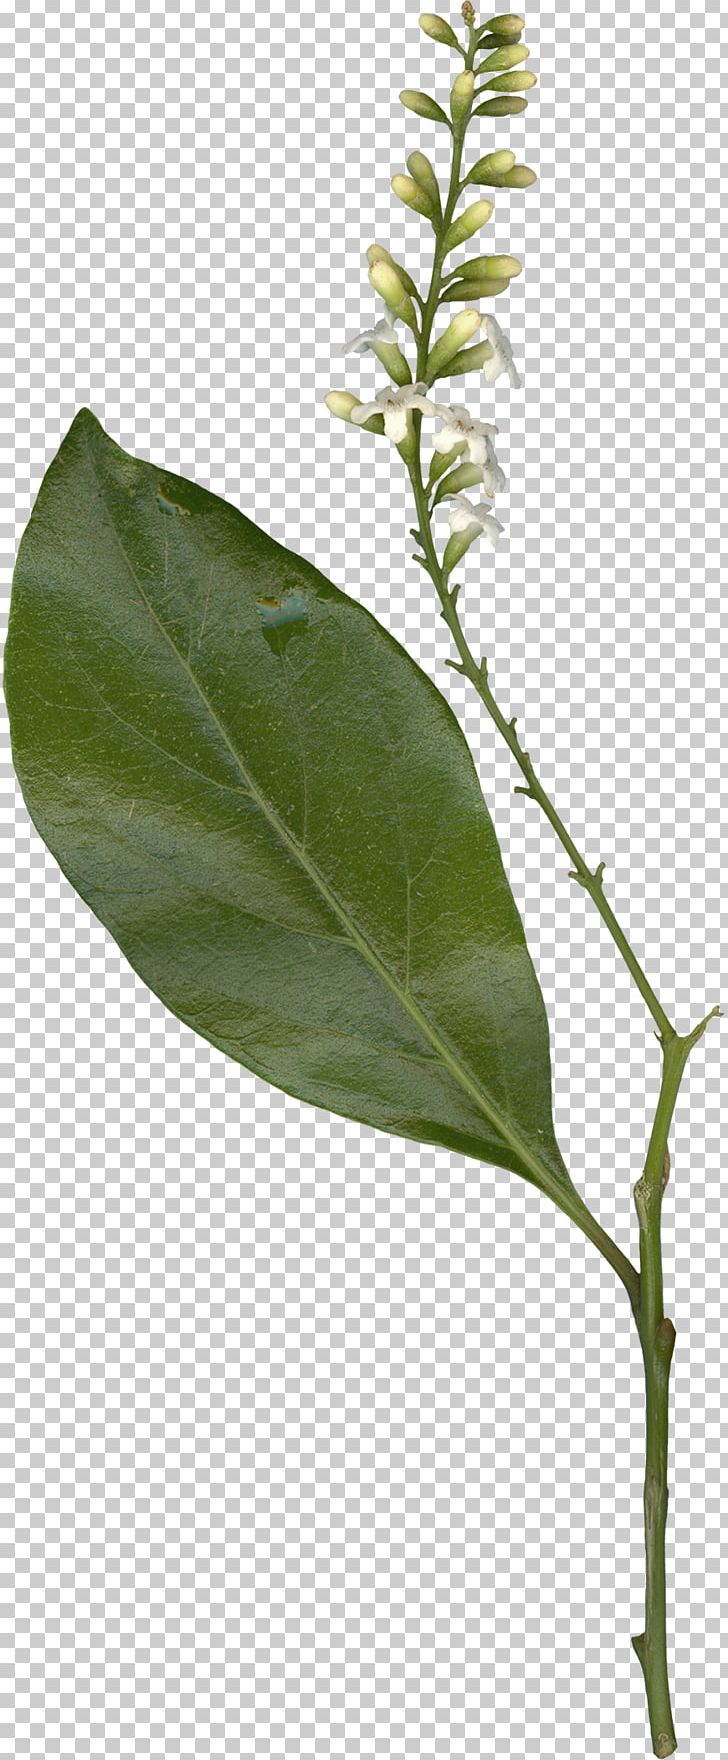 Twig Branch Plant Stem Leaf Tree PNG, Clipart, Branch, Food Drinks, Leaf, Plant, Plant Stem Free PNG Download